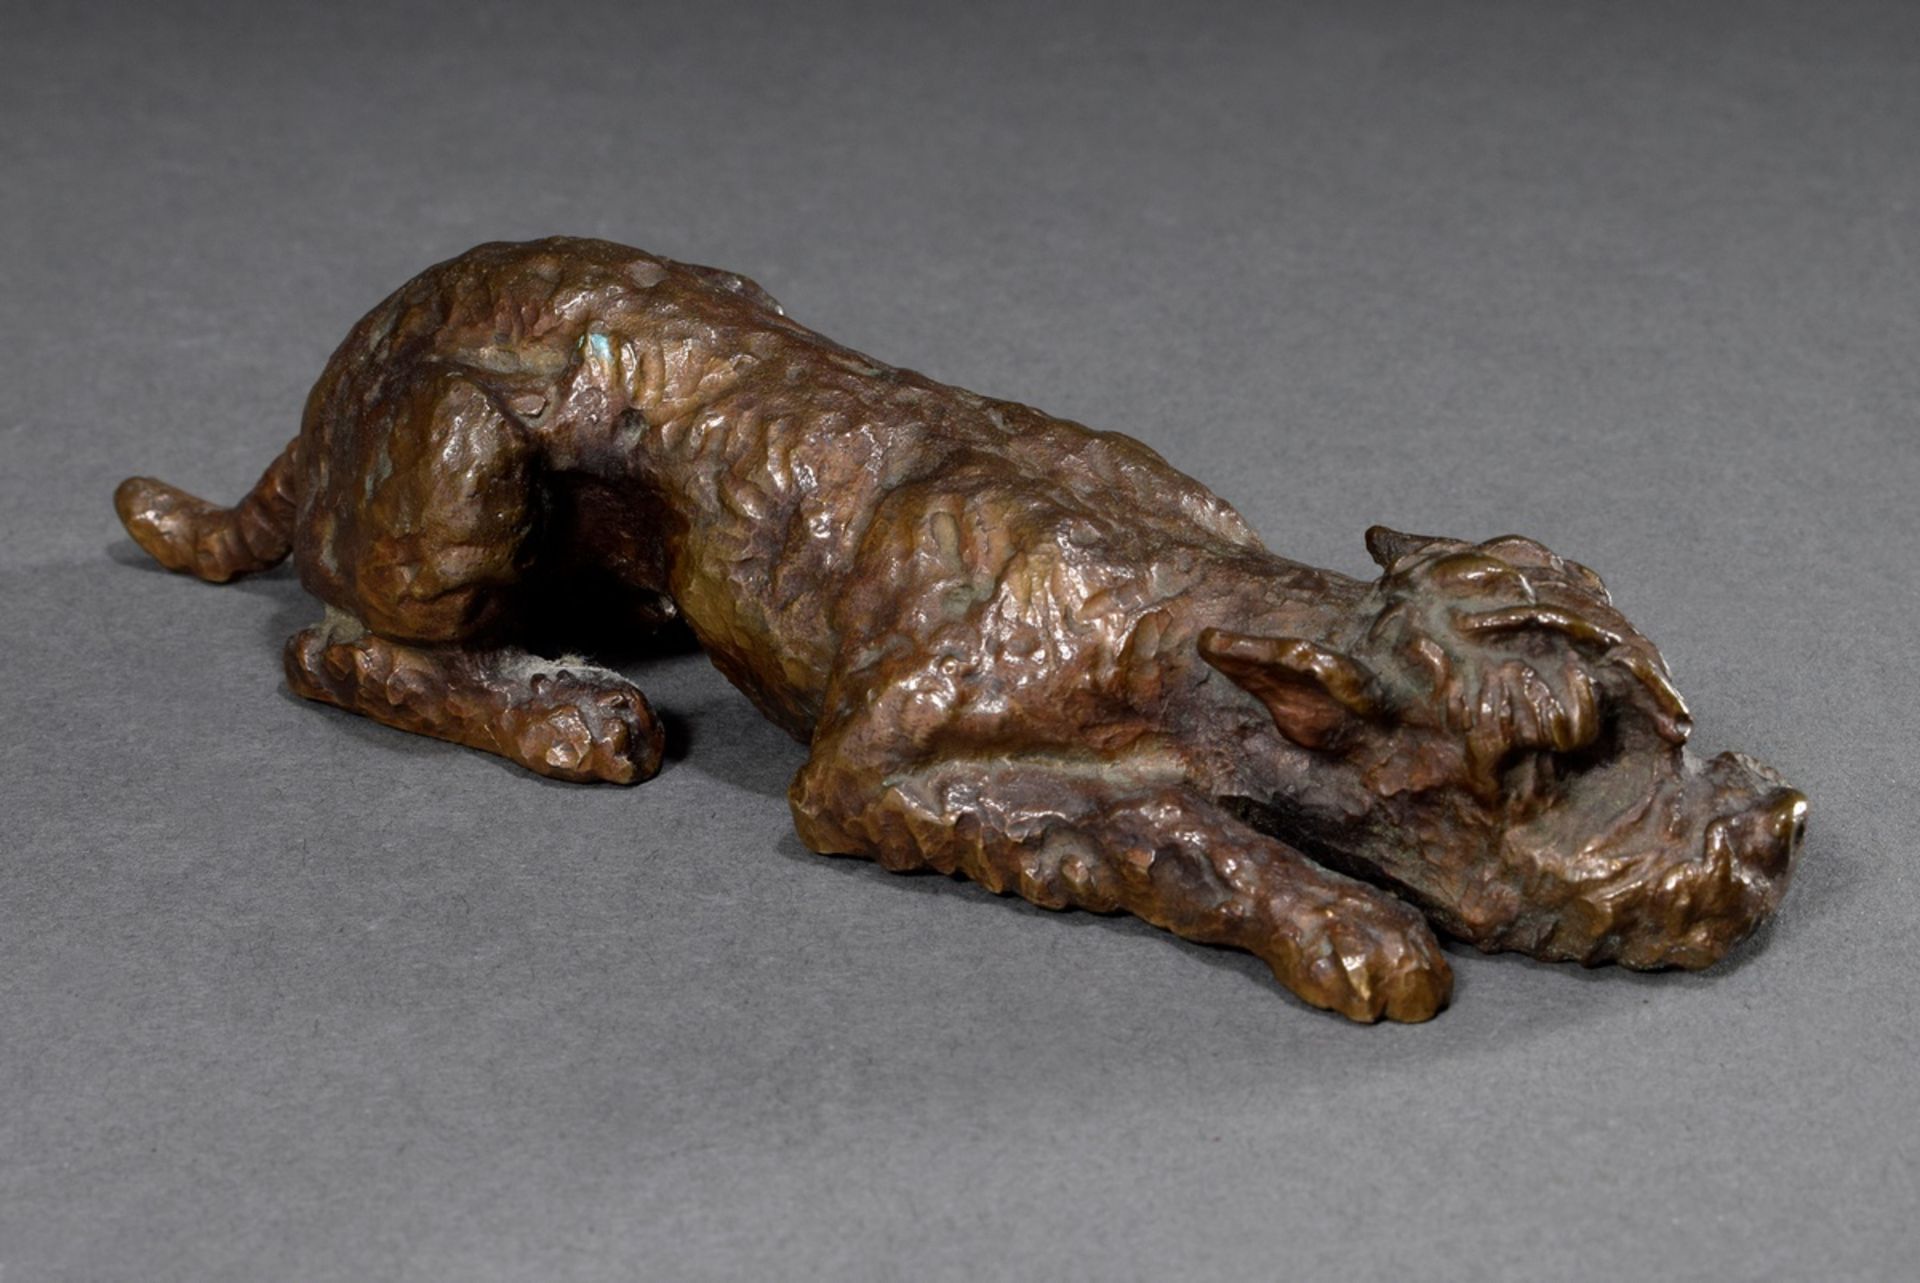 Sintenis, Renée (1888-1965) "Liegender Terrier" 1928, bronze dark patinated, monogr. "RS" on the bo